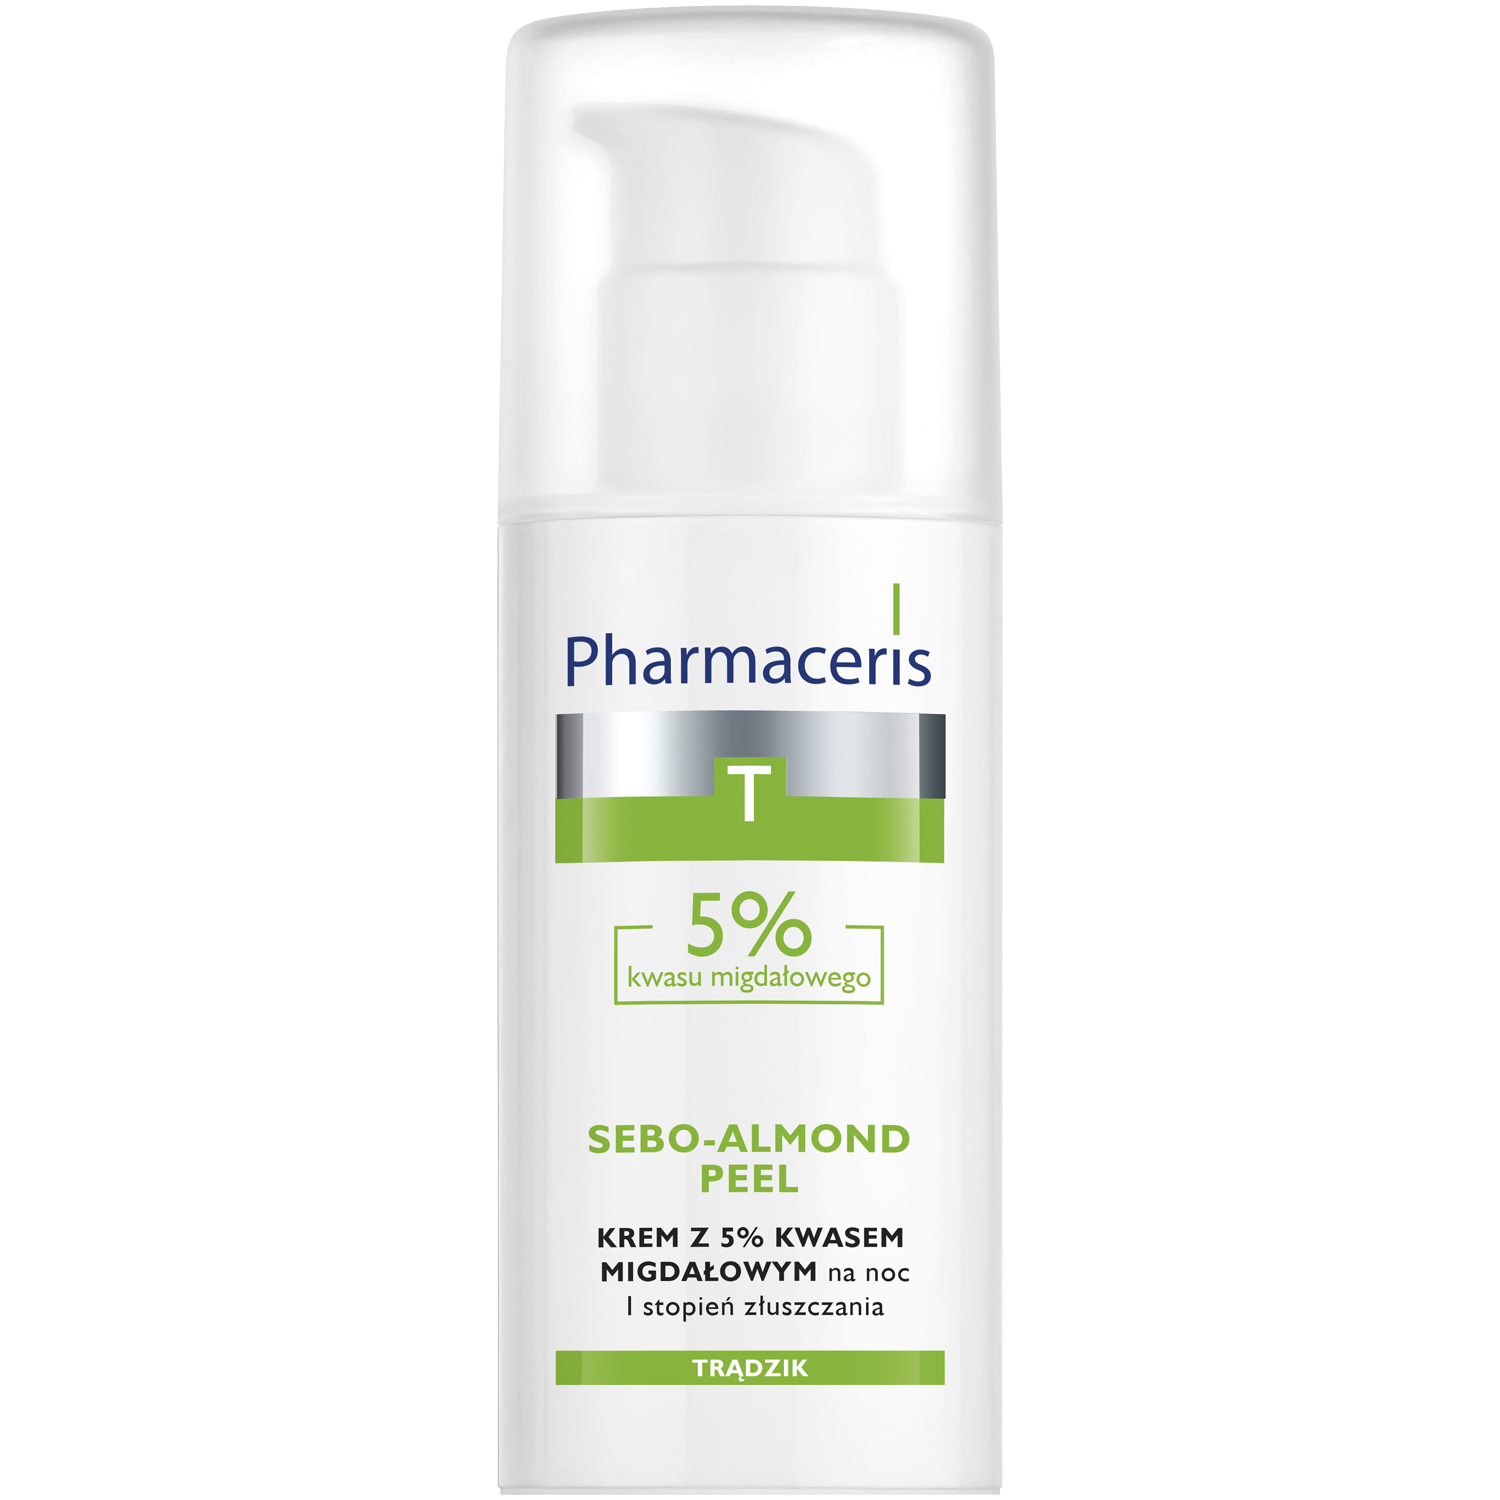 Pharmaceris T Sebo-Almond Peel 5% ночной крем с 5% миндальной кислотой, 1 степень отшелушивания, 50 мл pharmaceris t sebo almond claris cleasing solution 190 ml